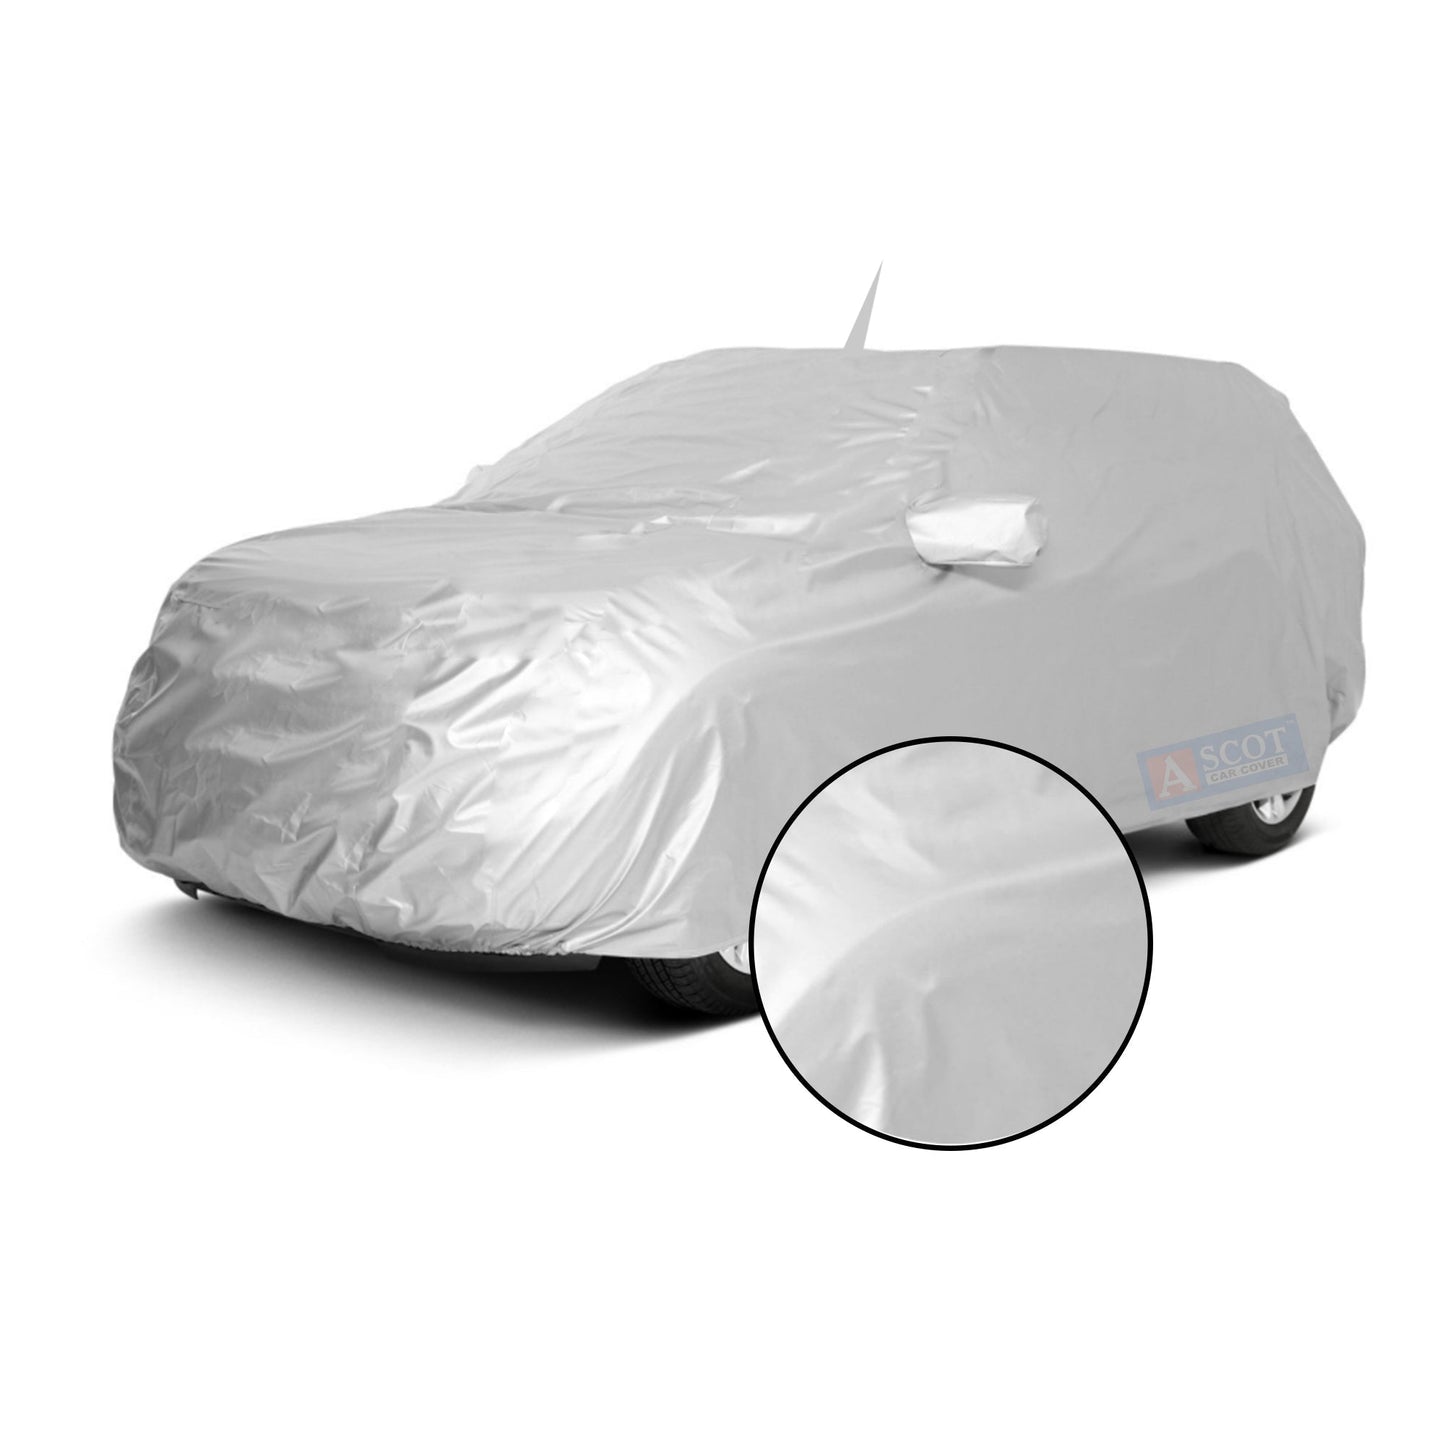 Ascot Hyundai Elite i20 2014-2020 Model Car Body Cover Dust Proof, Trippel Stitched